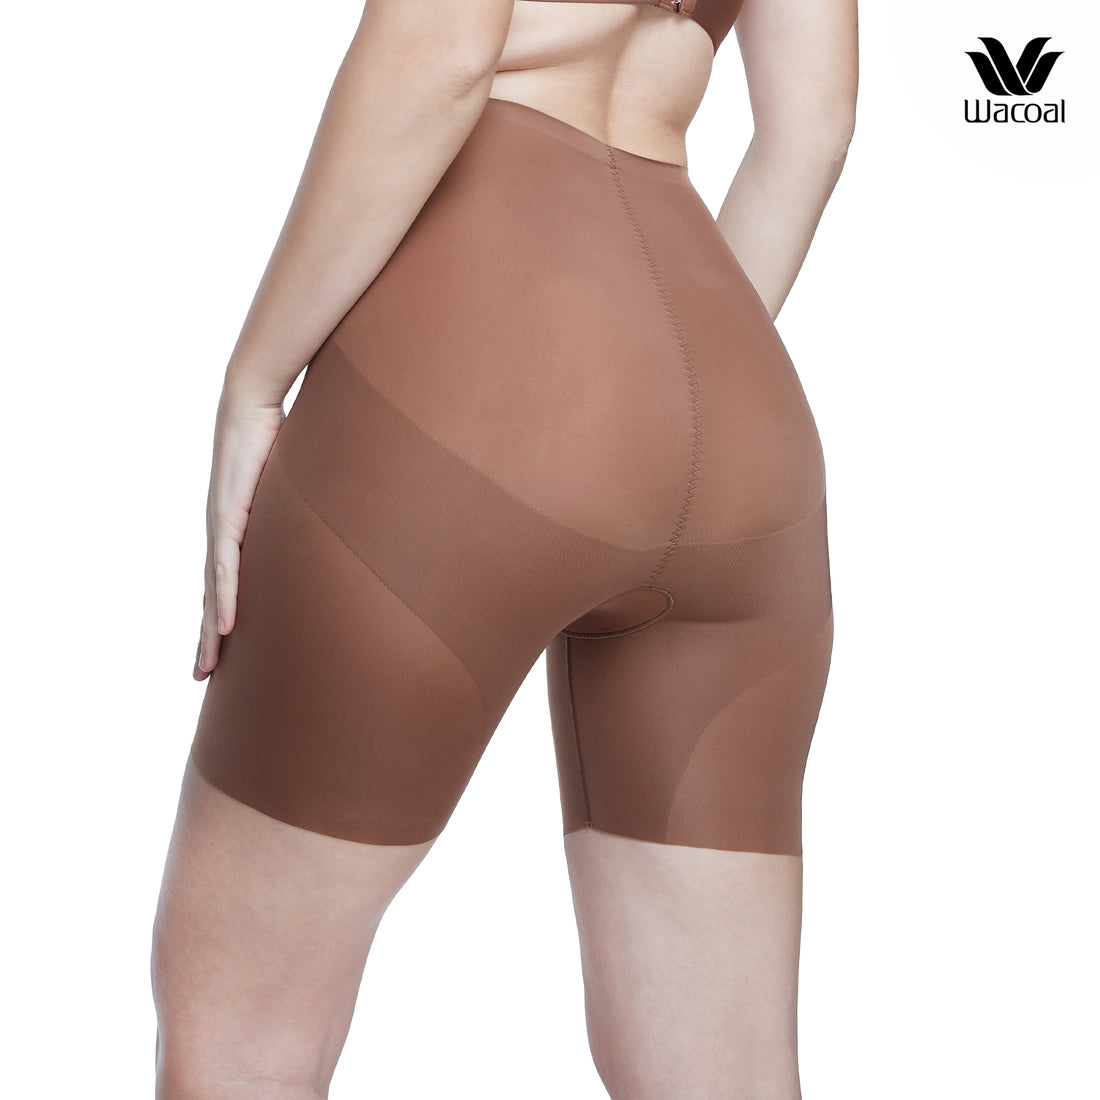 Wacoal Shape Beautifier Hips กางเกงเก็บกระชับแบบขายาว รุ่น WY1617  สีน้ำตาล (BR)